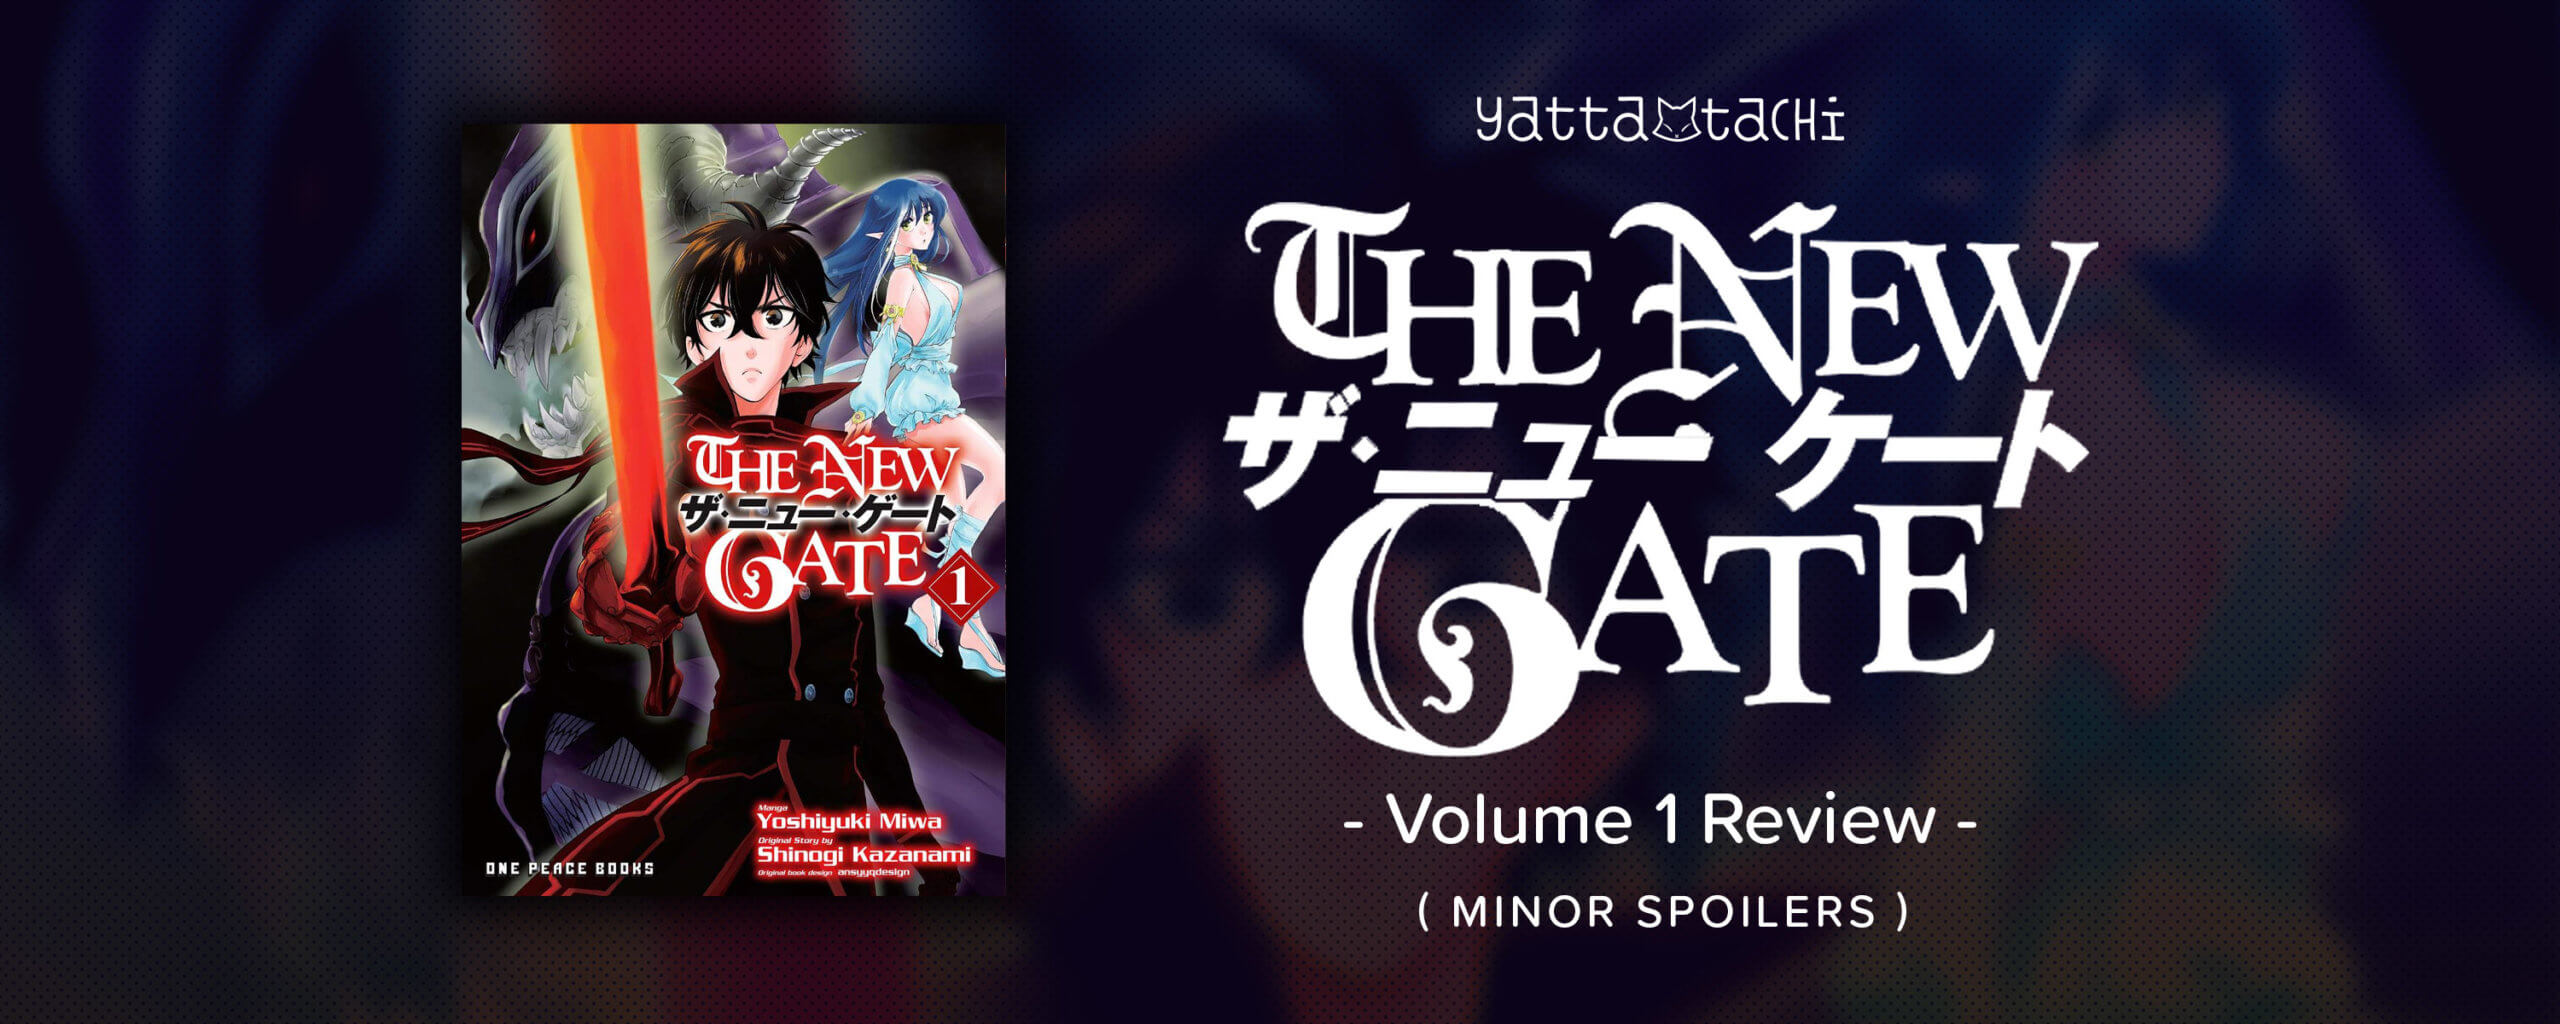 The New Gate Volume 1 Review Minor Spoilers Yatta Tachi